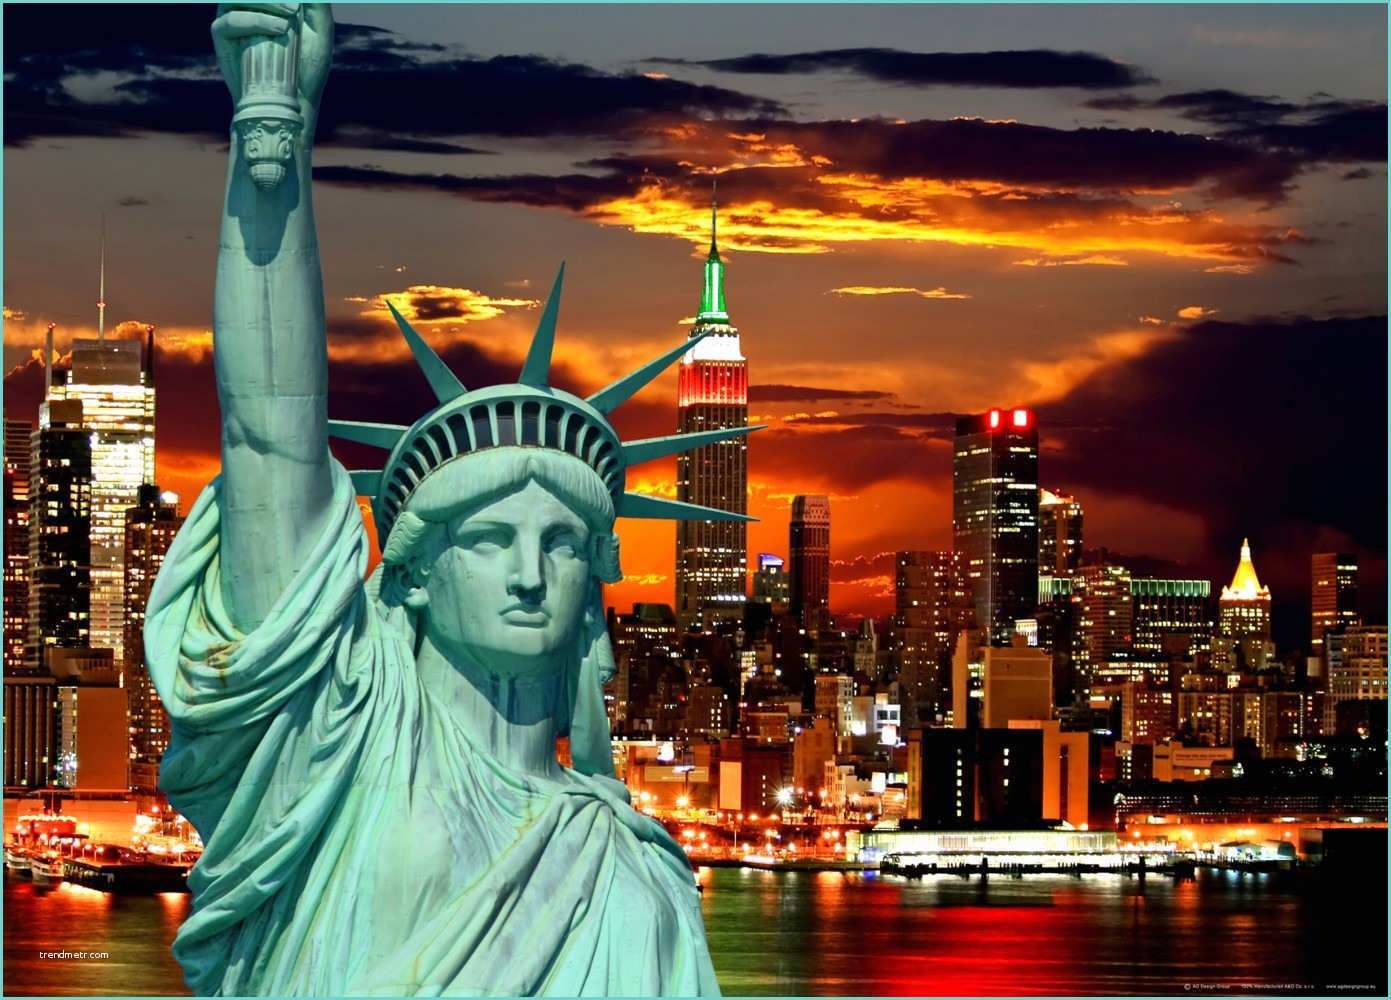 Poster Xxl New York Xxl Poster Wall Mural Wallpaper Statue Of Liberty New York